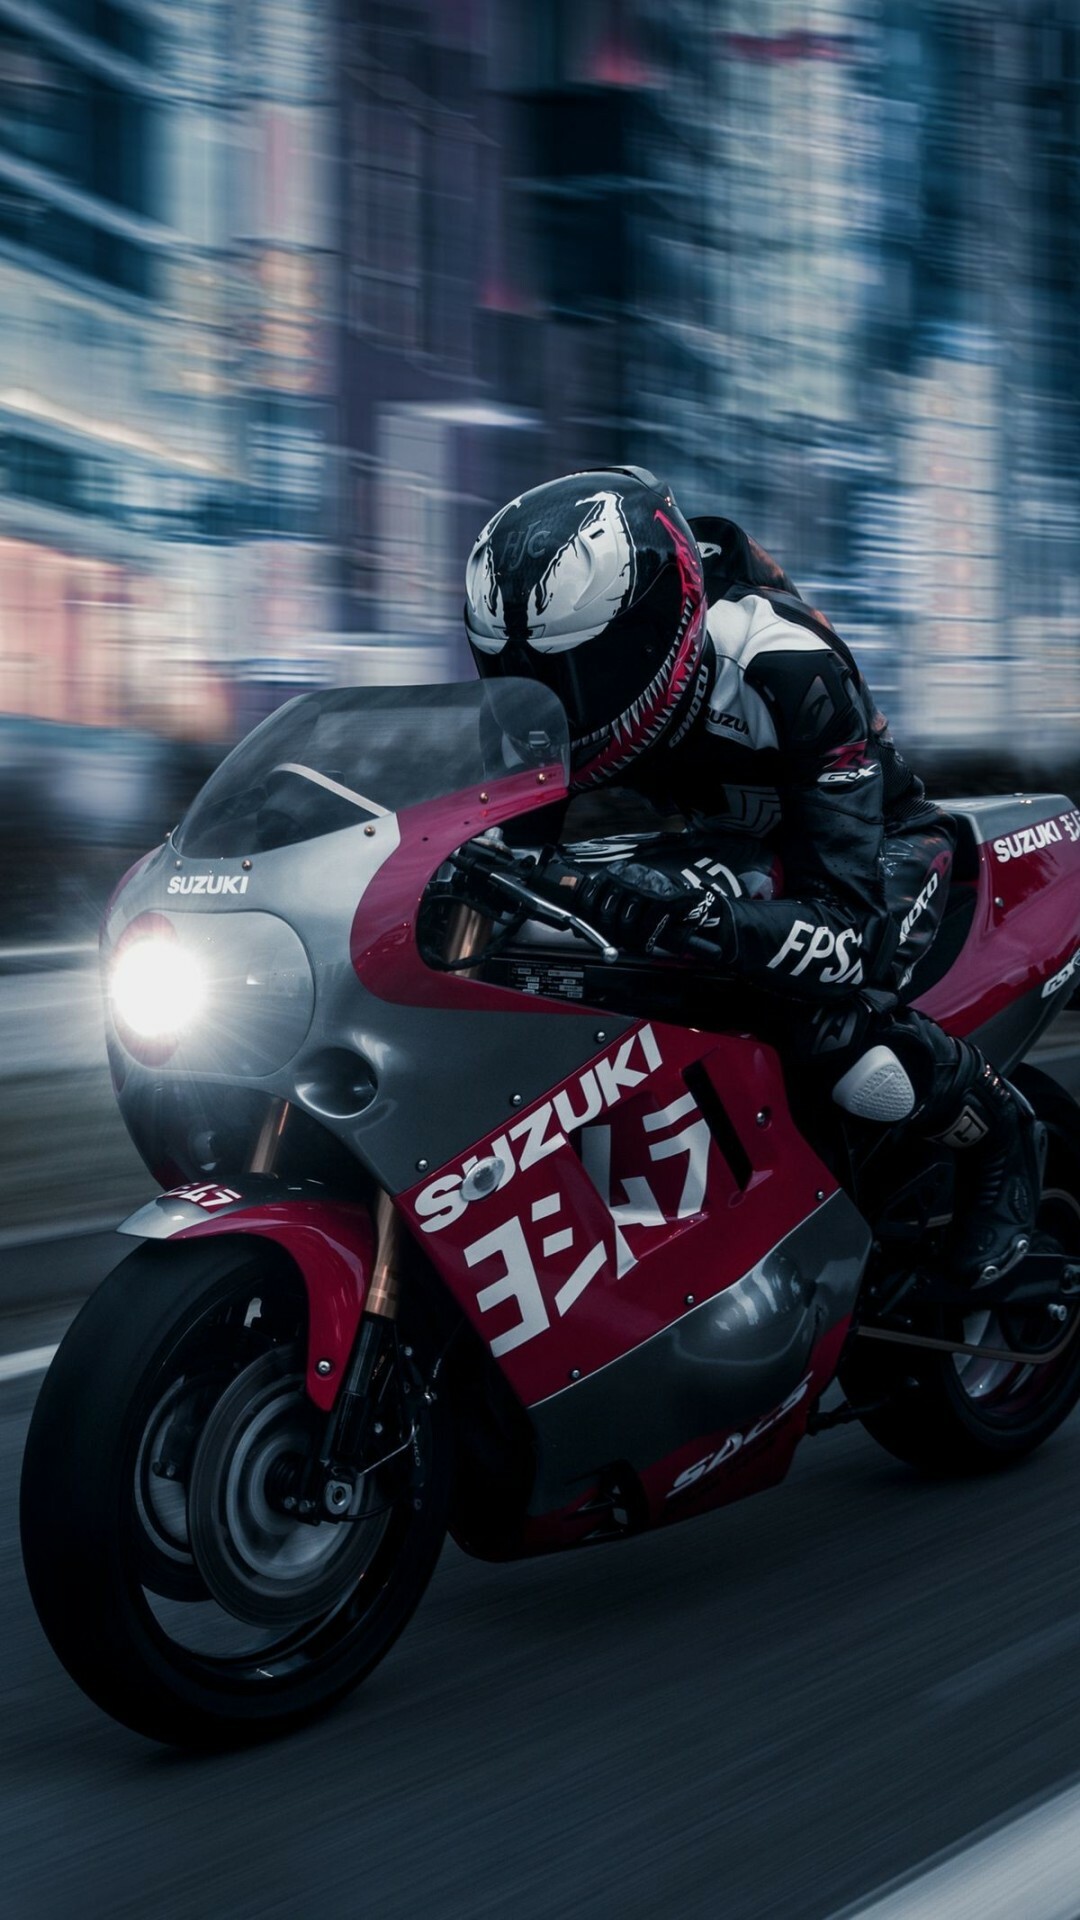 GSX-R: Gixxer 750, A sports motorcycle made by Suzuki, Bike. 1080x1920 Full HD Background.